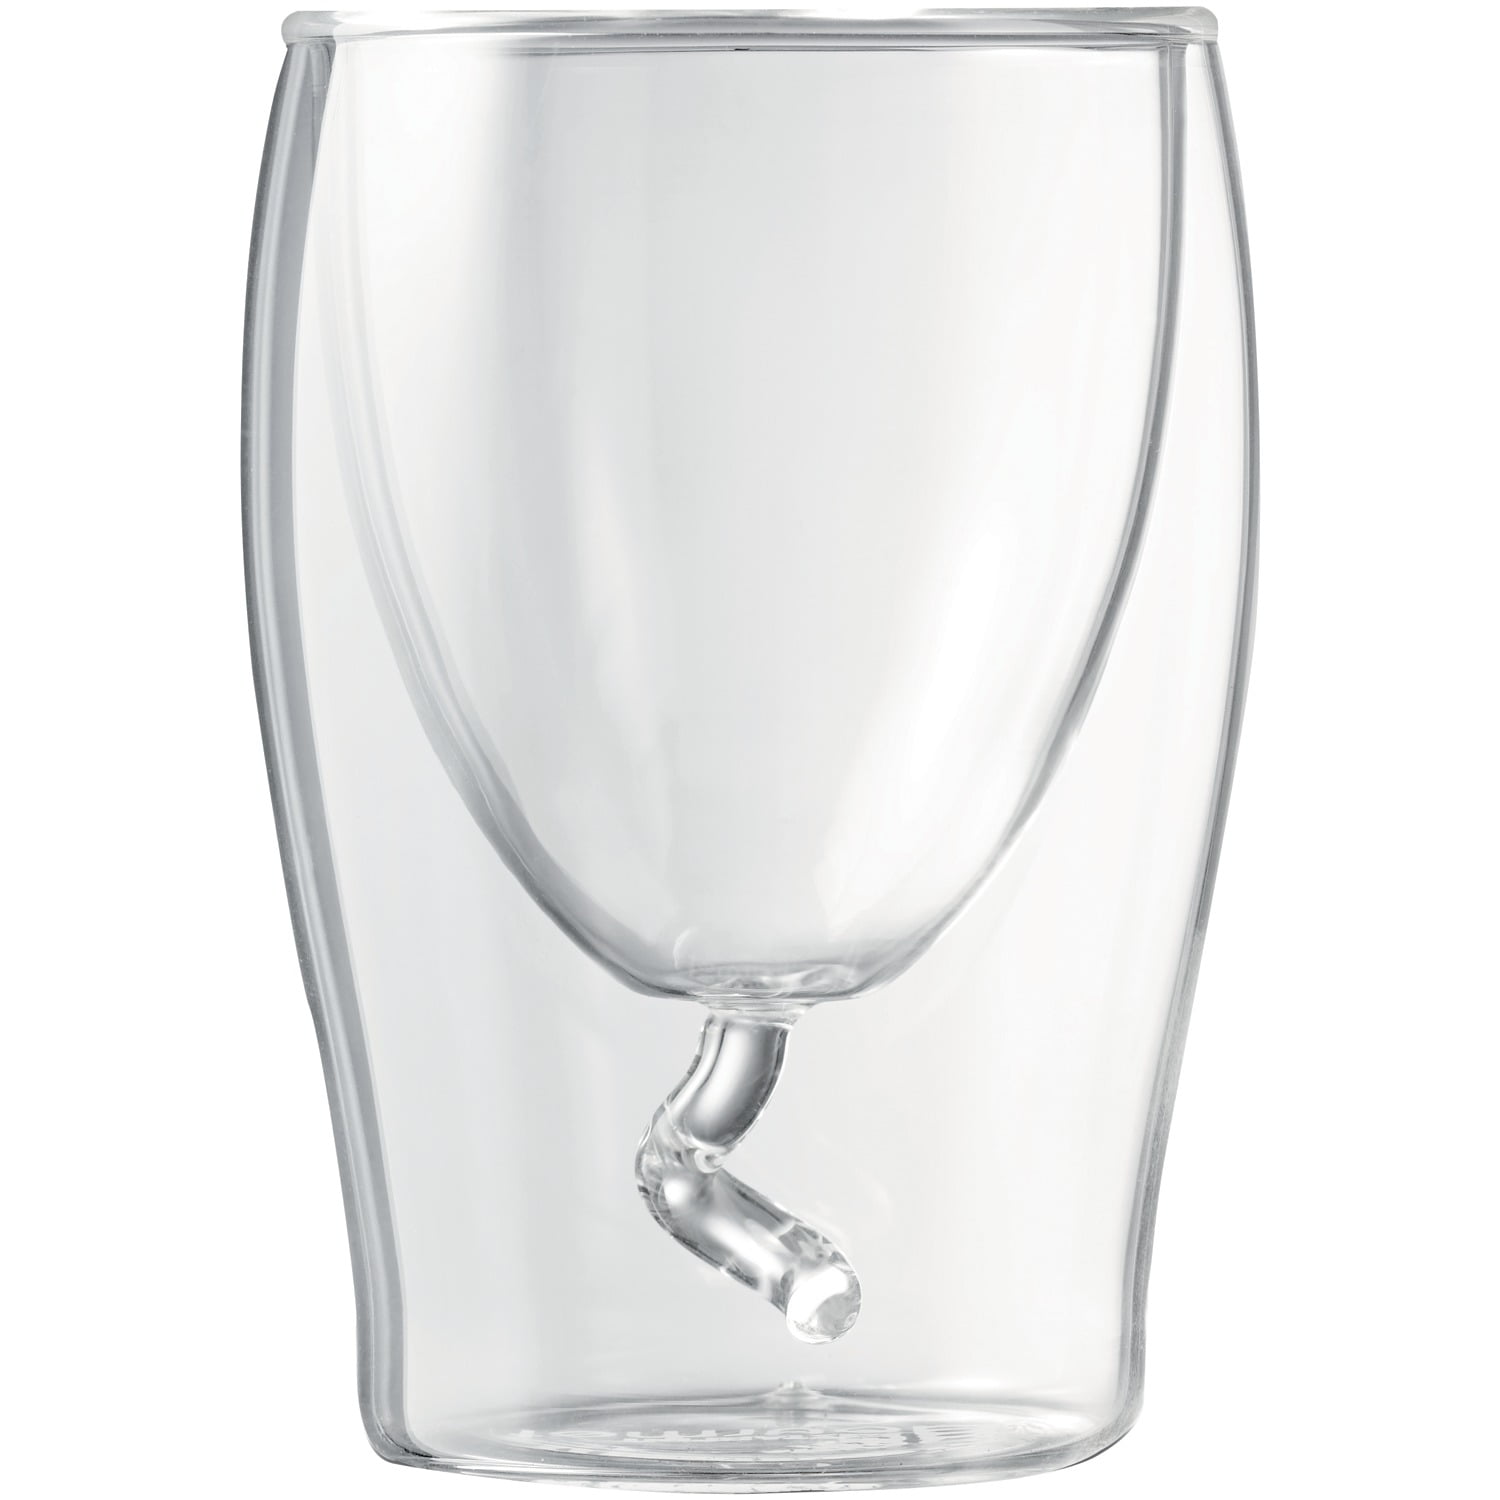 Starfrit 080052-006-0000 13 oz Double-Wall Thermo Borosilicate Verrine Glass Clear 